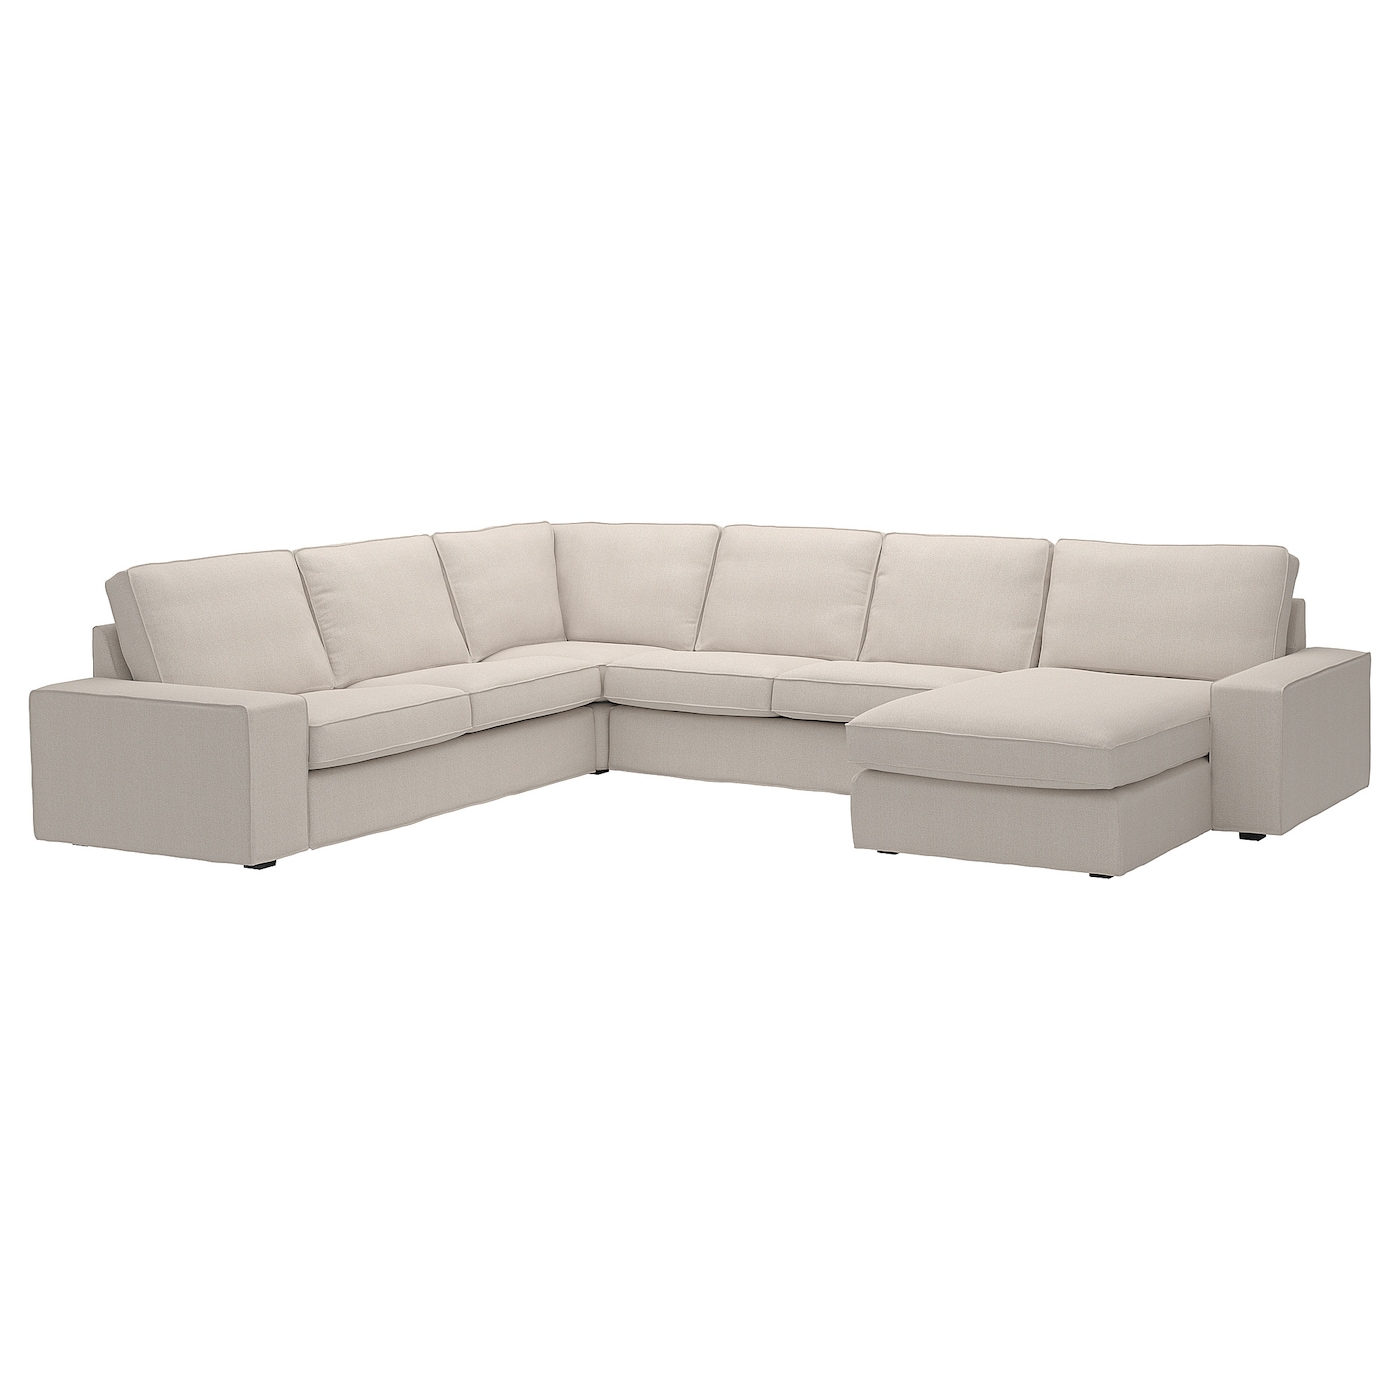 КИВИК Диван угловой, 5-местный. диван+диван, Тресунд светло-бежевый KIVIK IKEA